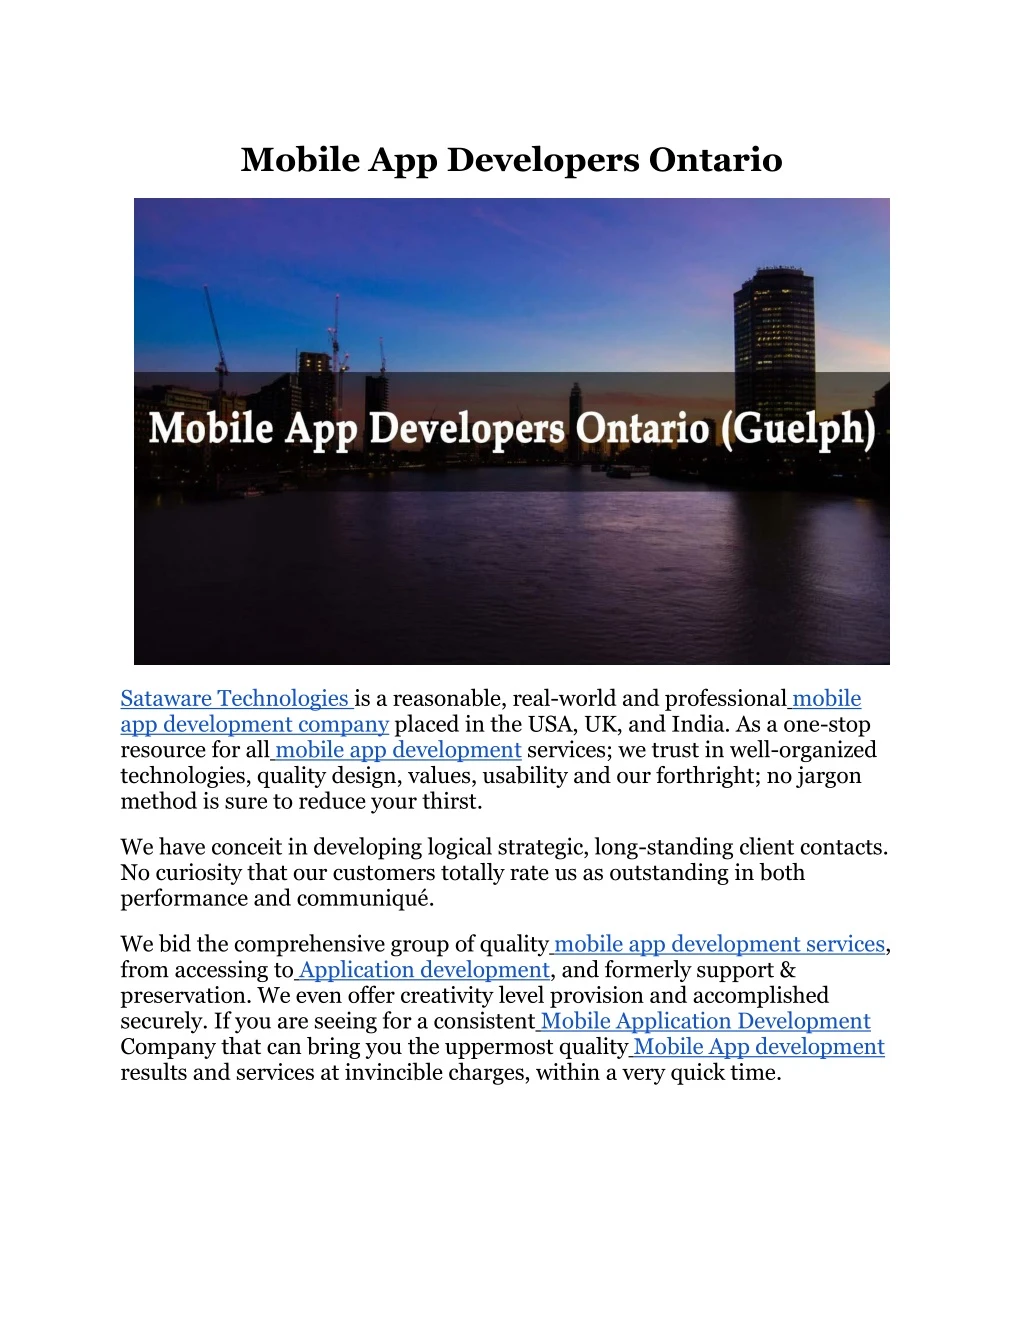 mobile app developers ontario